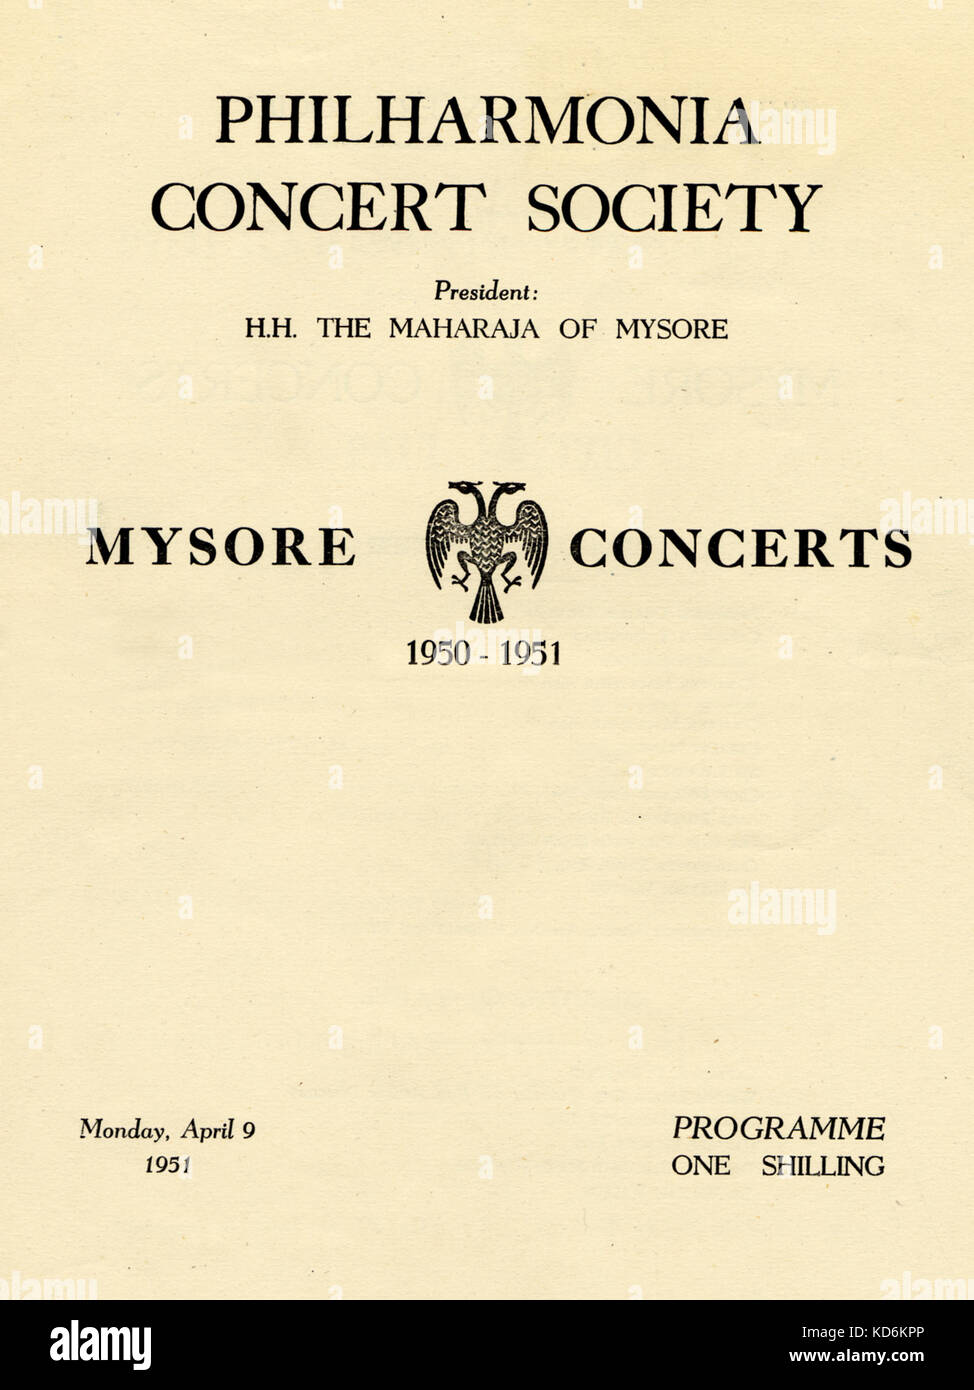 Mysore Concerts the Philharmonia Orchestra, at the Royal Albert Hall, 1950-1951 season. Philharmonia Concert Society president Maharaja of Mysore. 9 April 1951. Programme cover  Richard Strauss performance Stock Photo